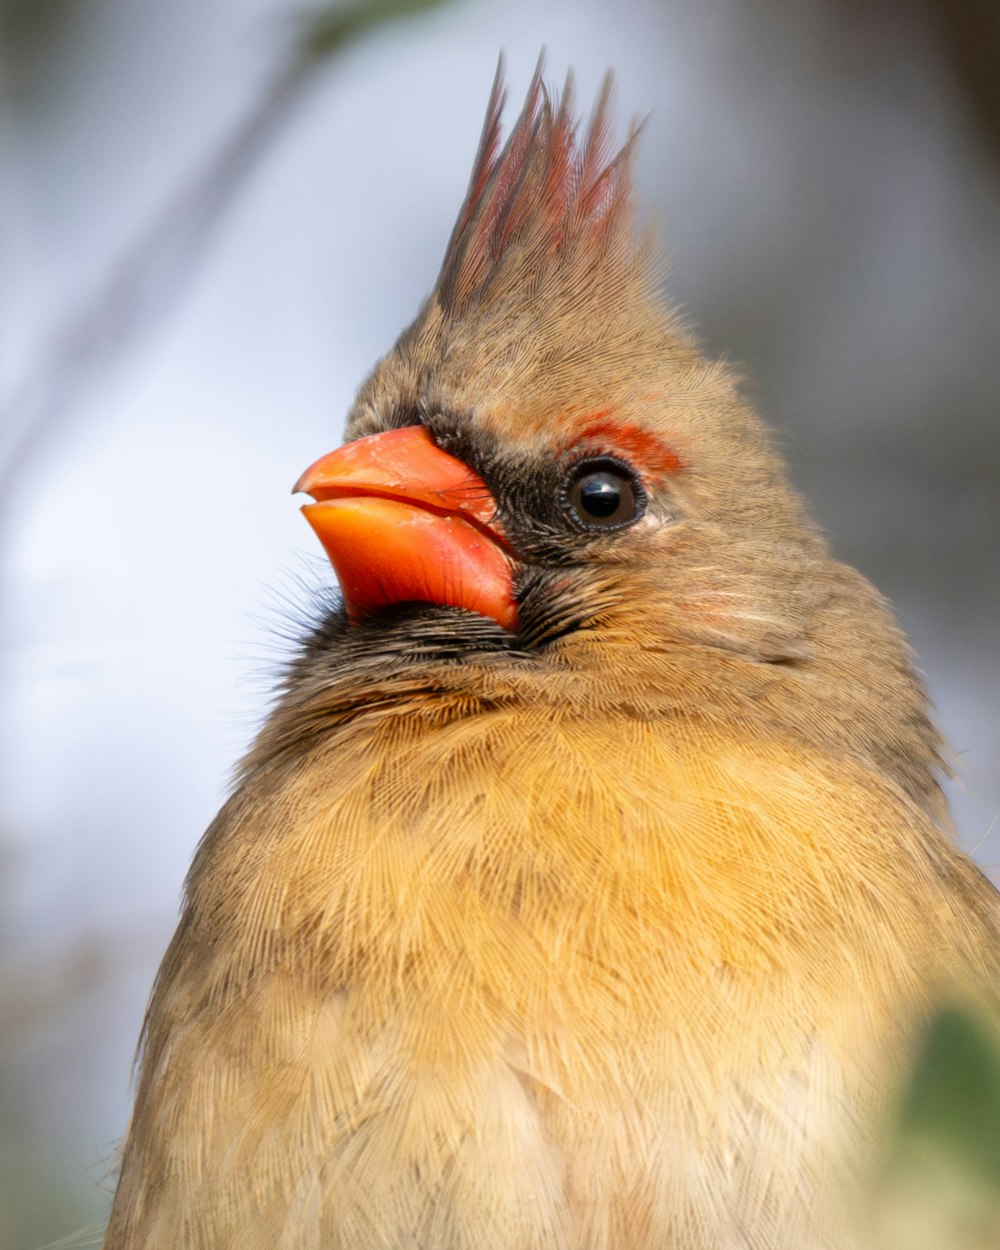 a close up of a bird with a red beak